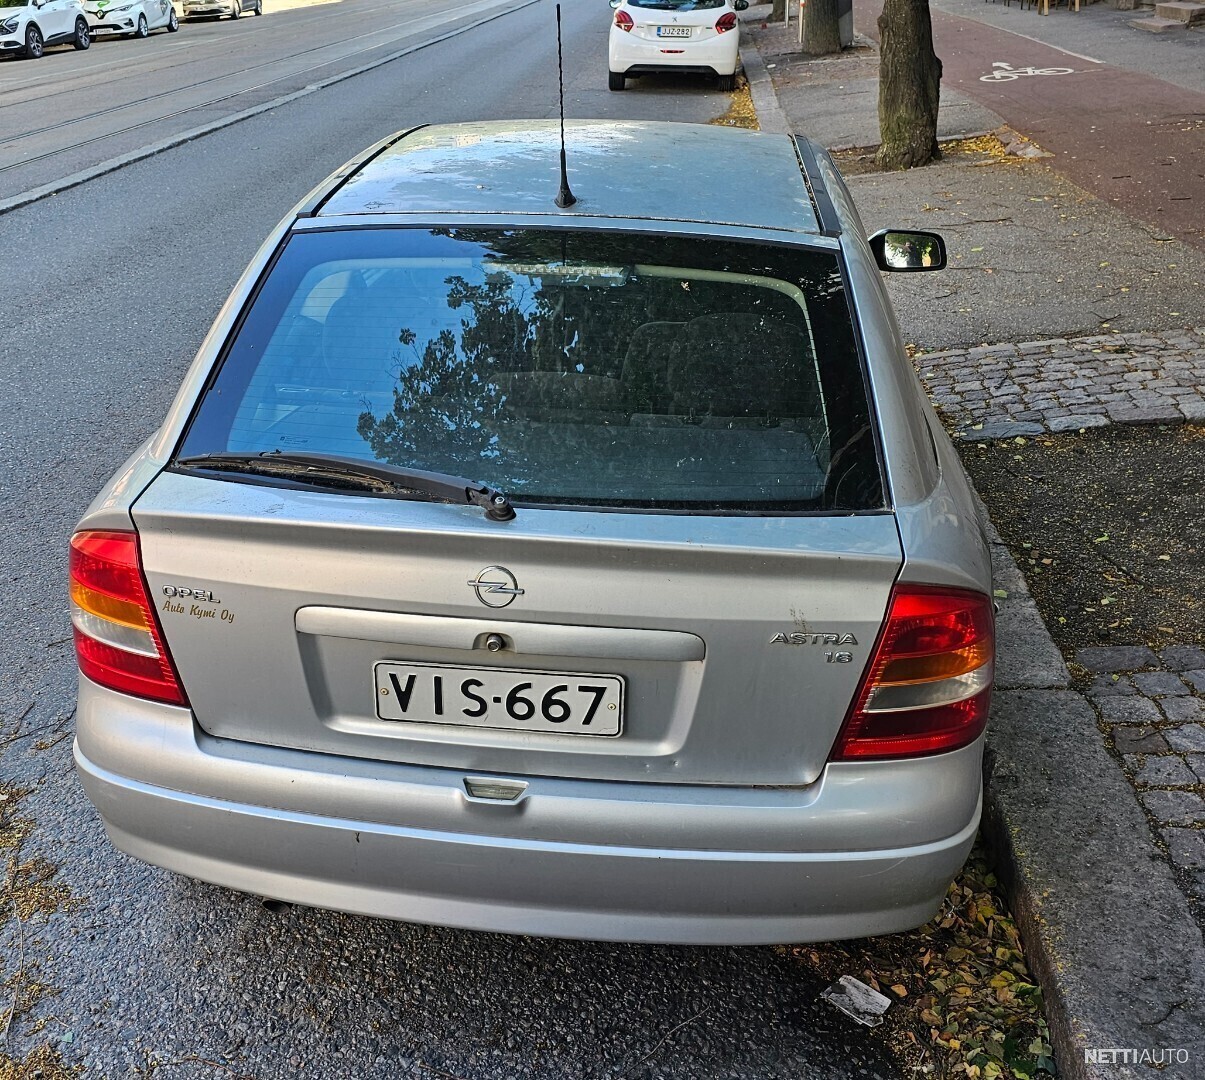 Opel Astra Hatchback 1999 - Used vehicle - Nettiauto